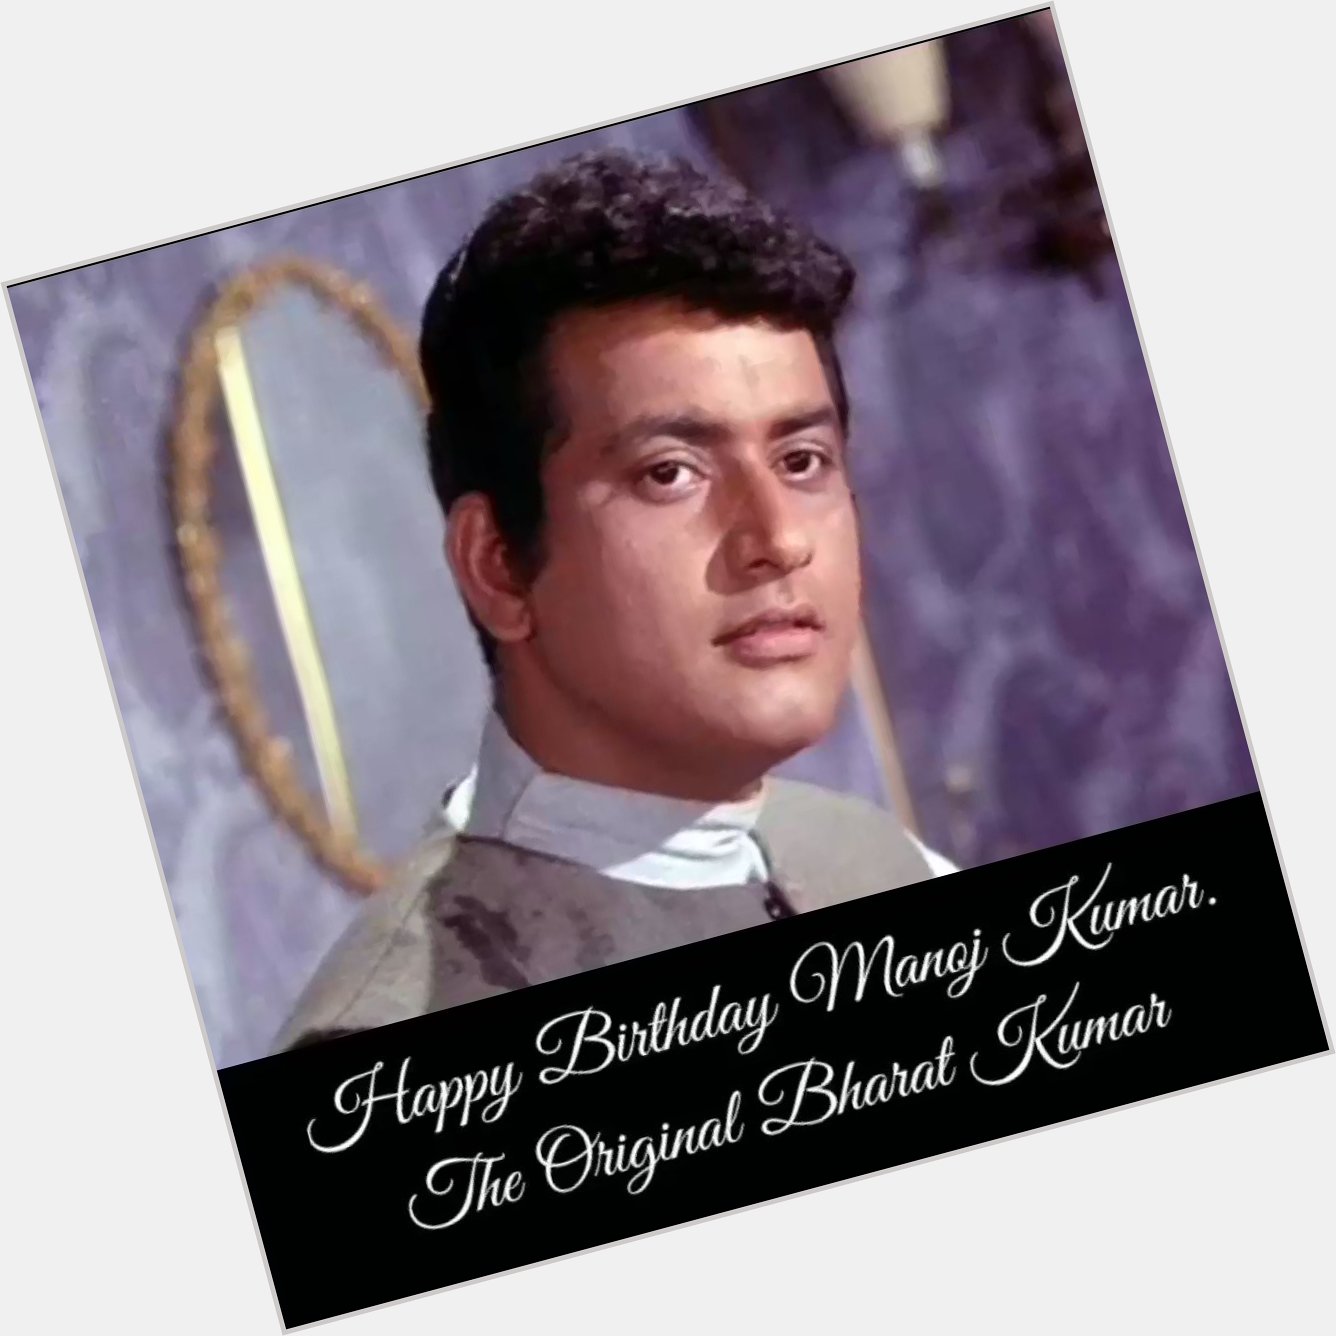 Happy birthday Manoj kumar # the original Bharat Kumar    